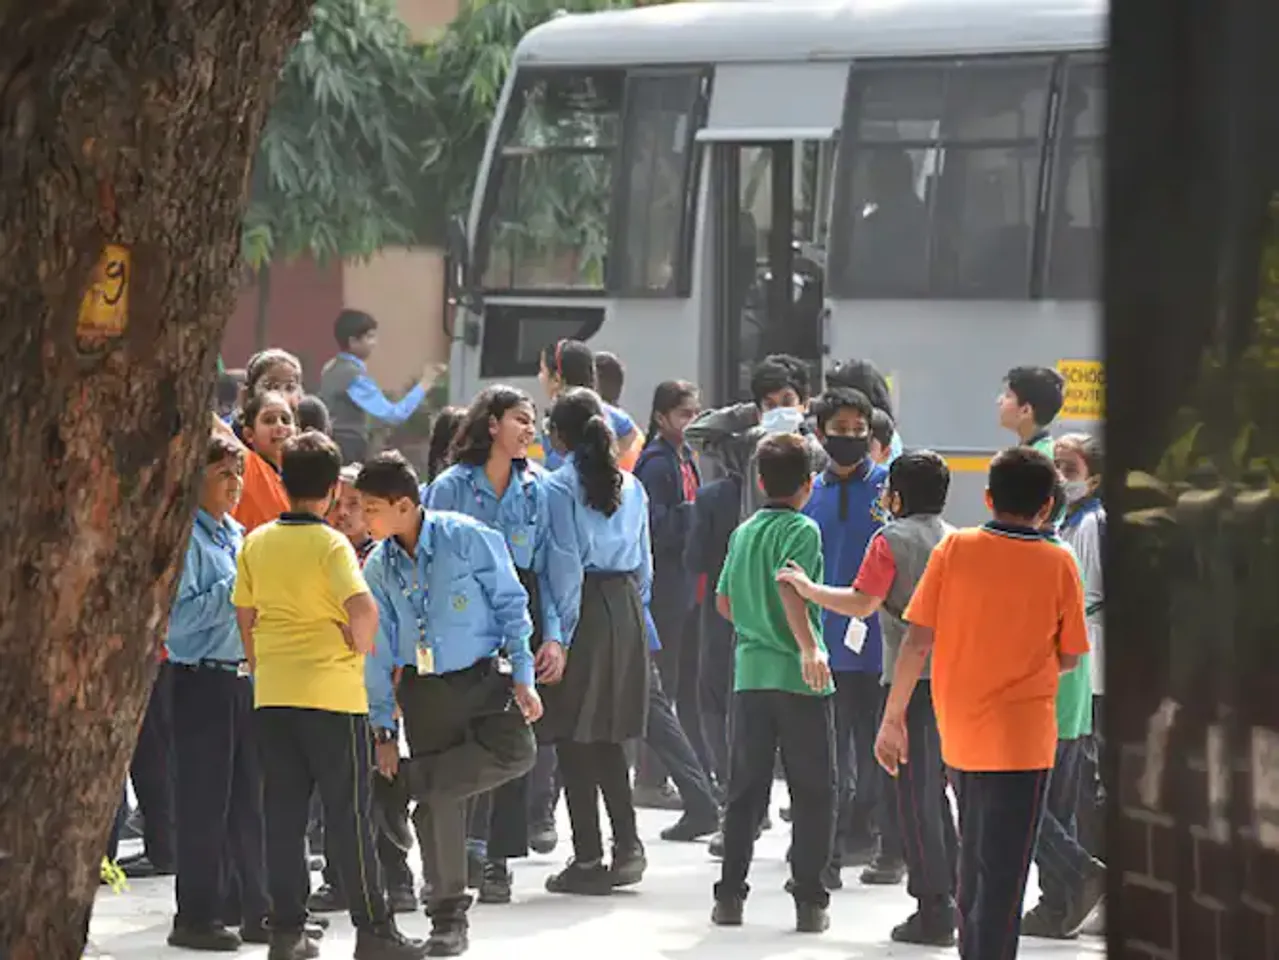 Indian Public School in Delhi receives bomb threat in e-mail